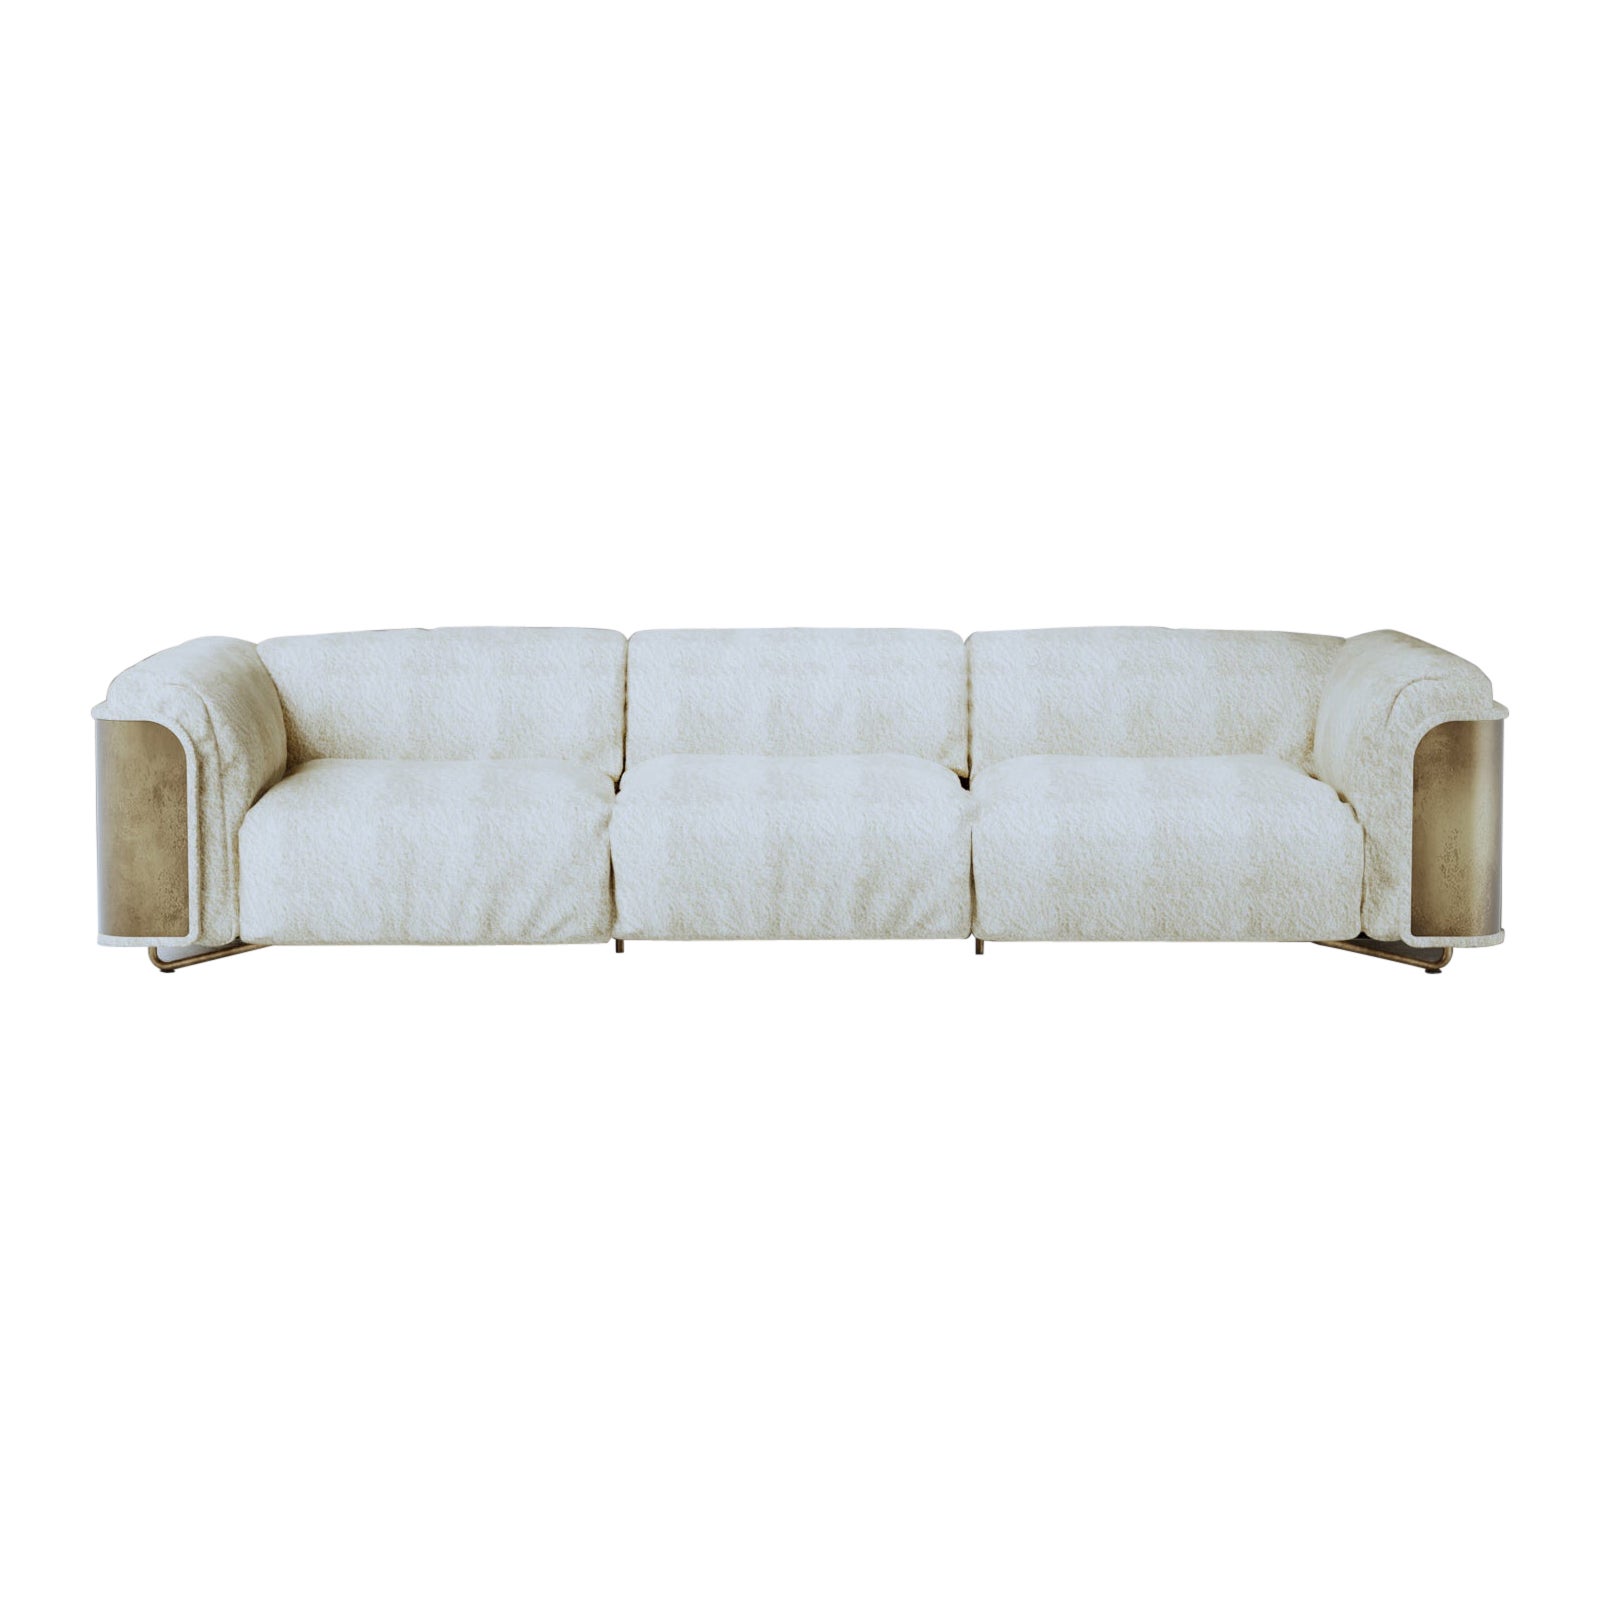 Nimbus Saint Germain Sofa by Gio Pagani For Sale